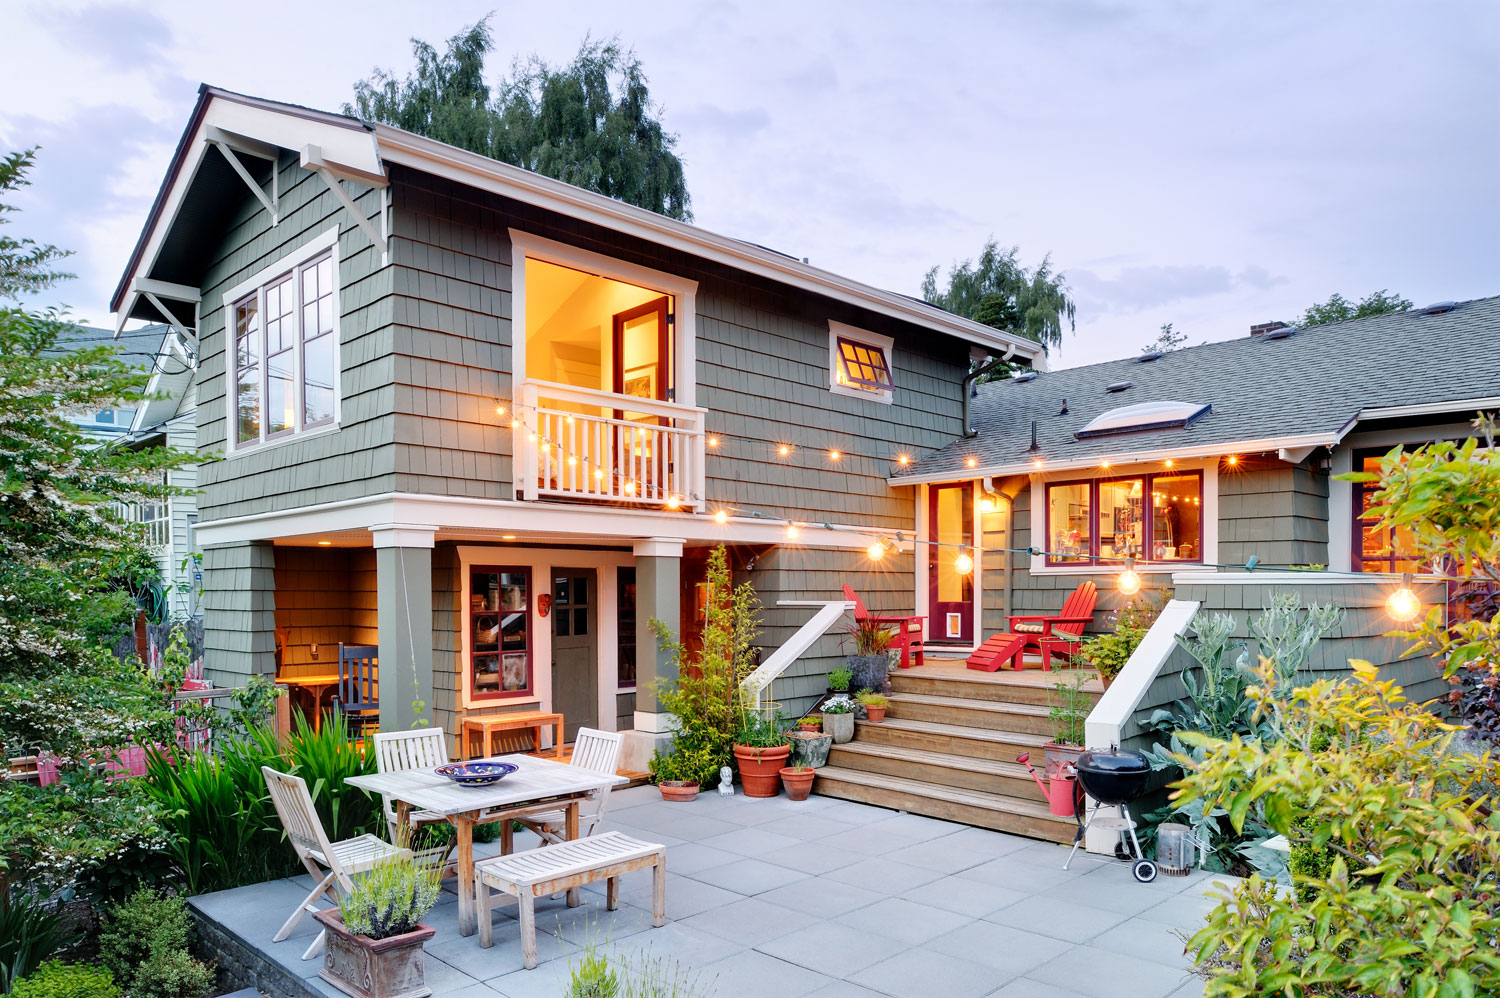 New Backyard Cottage D Adu Regulations Now In Effect In Seattle Cta Design Builders